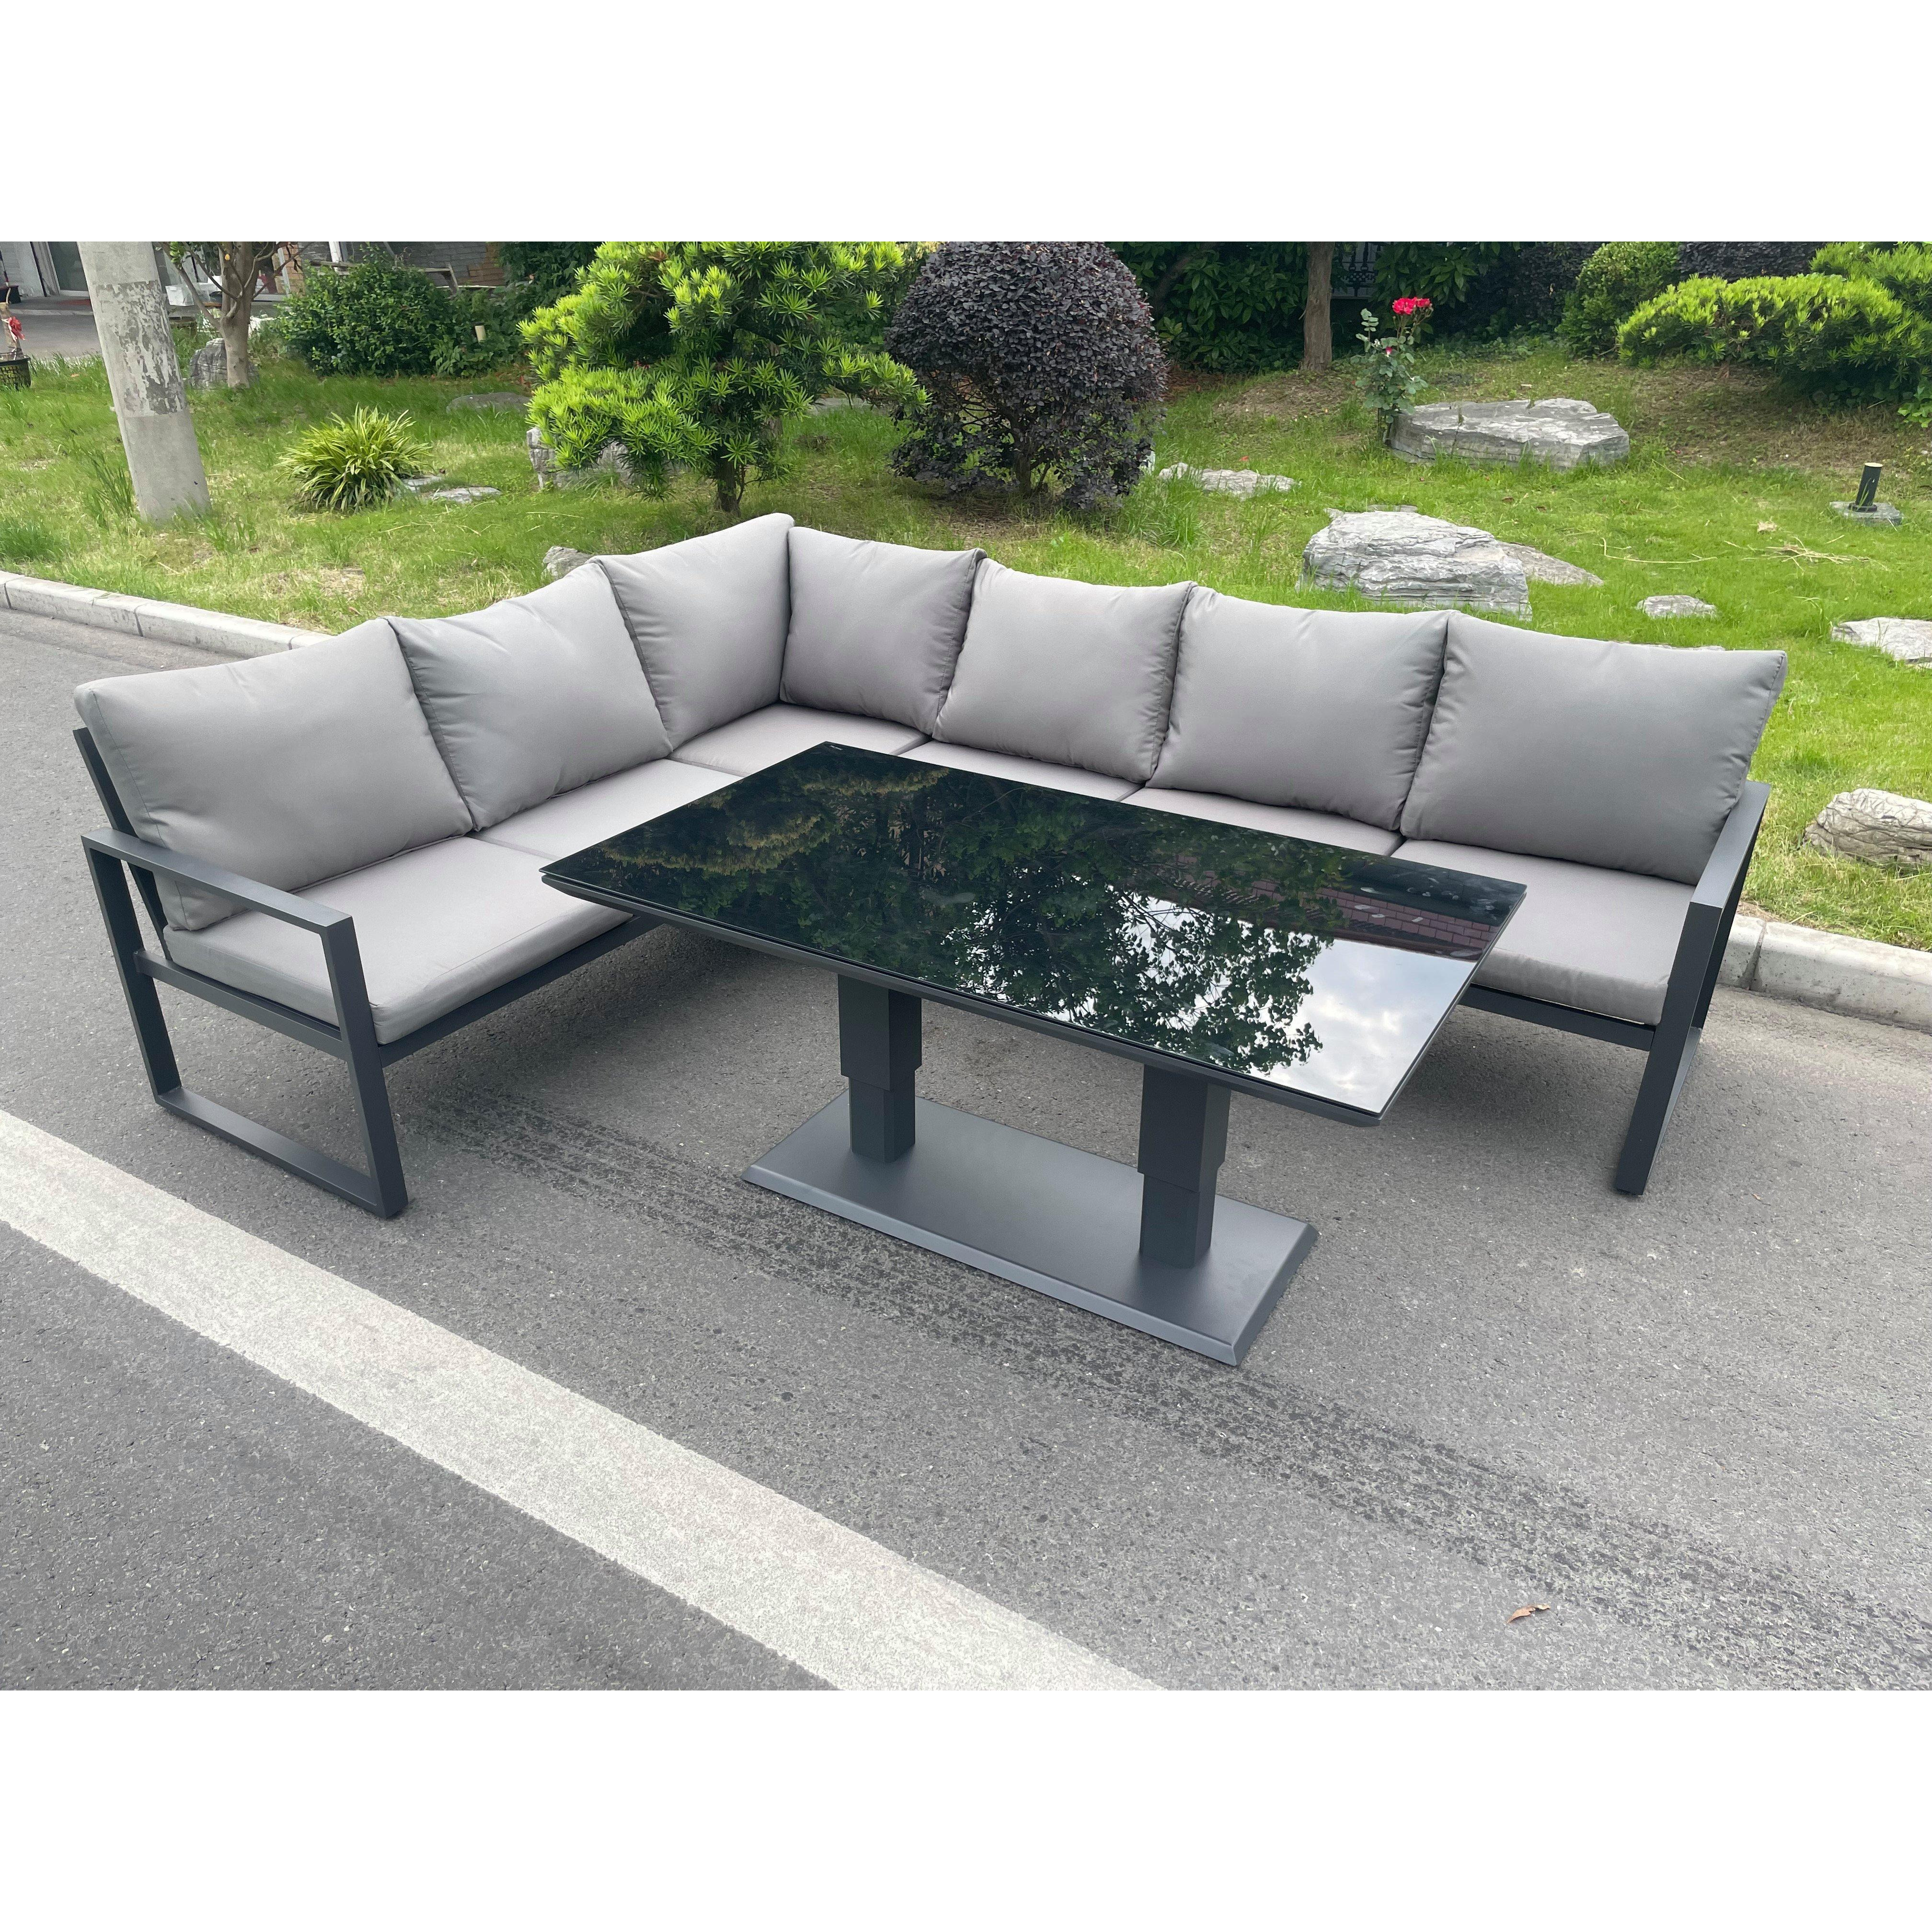 Aluminum Outdoor Garden Furniture Corner Sofa Adjustable Rising Lifting Dining Table Sets Dark Grey Black Tempered Glass 6 Seater - image 1